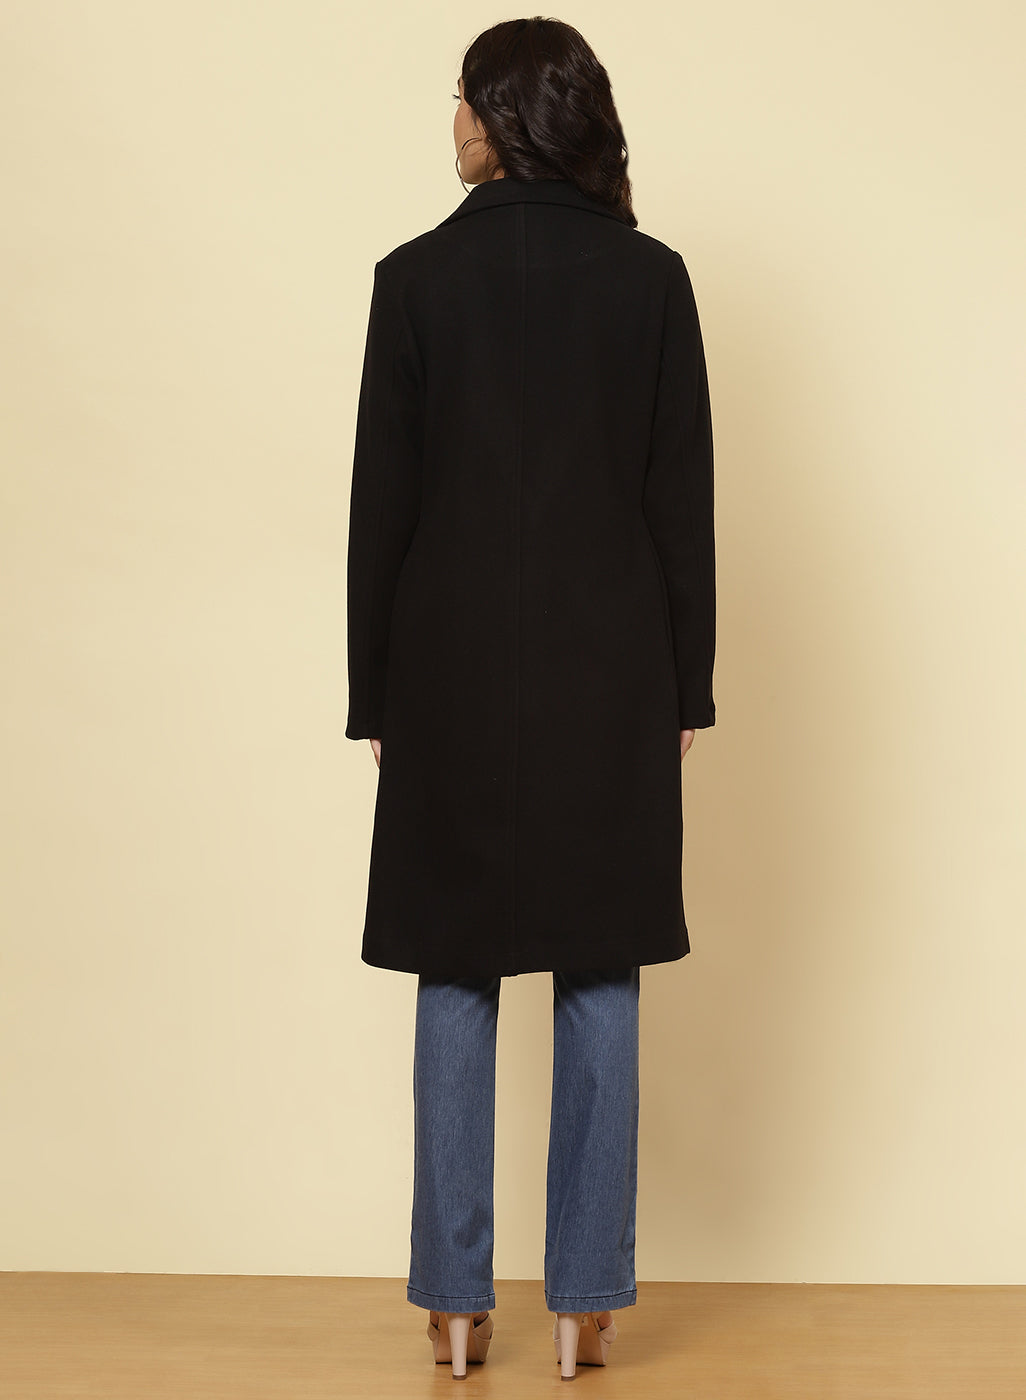 Charcoal black slim fit coat